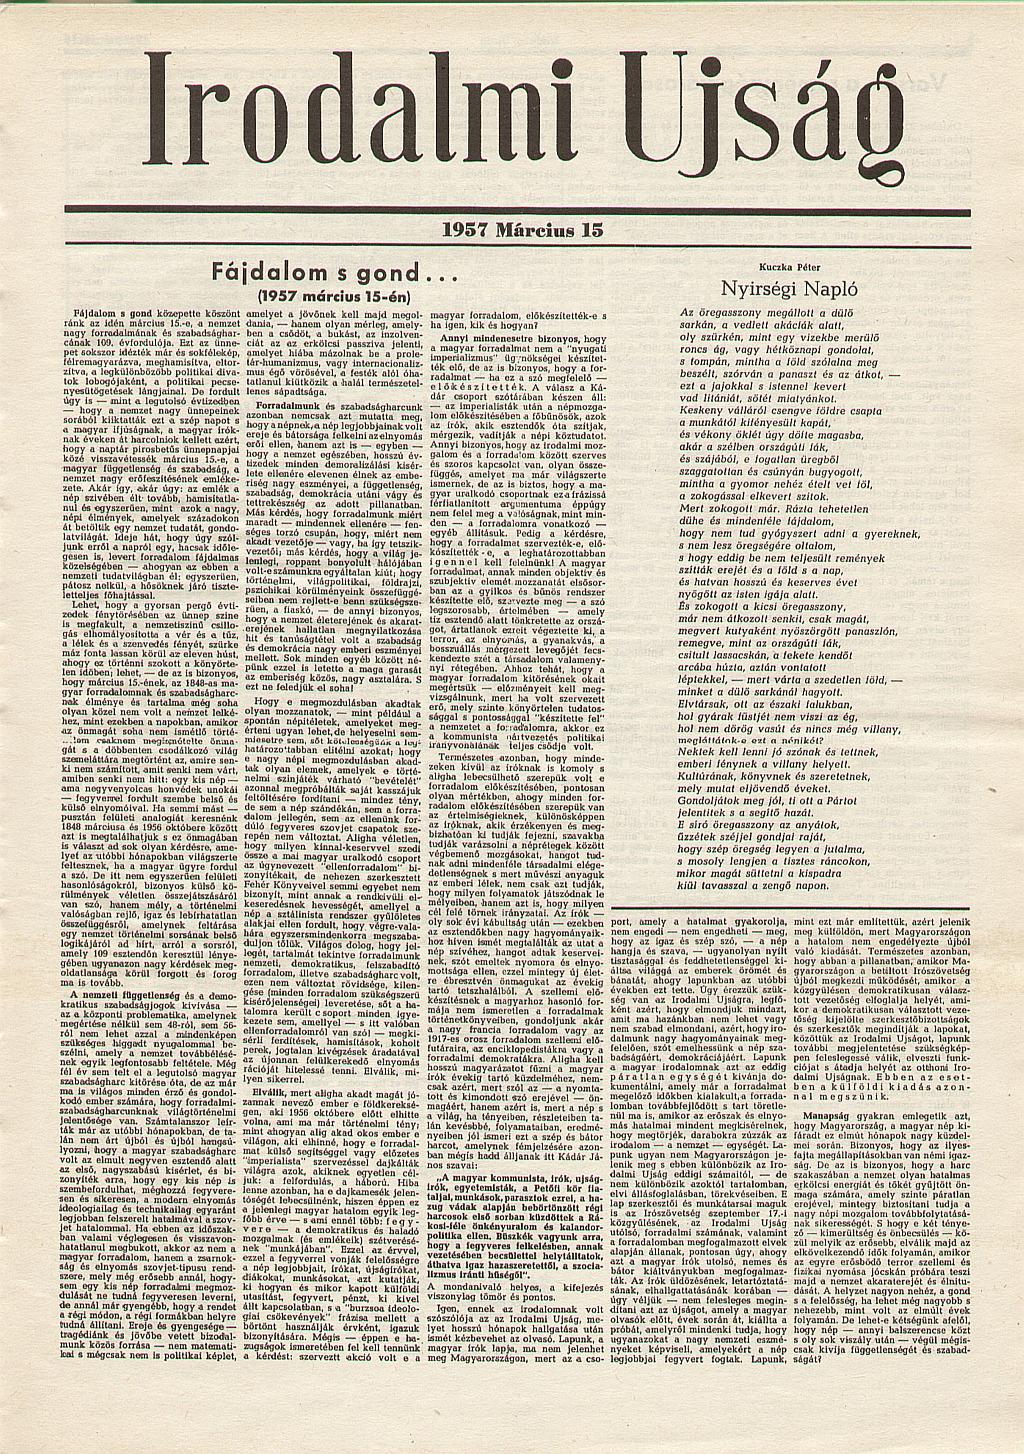 Irodalmi Újsag (1957 március 15)